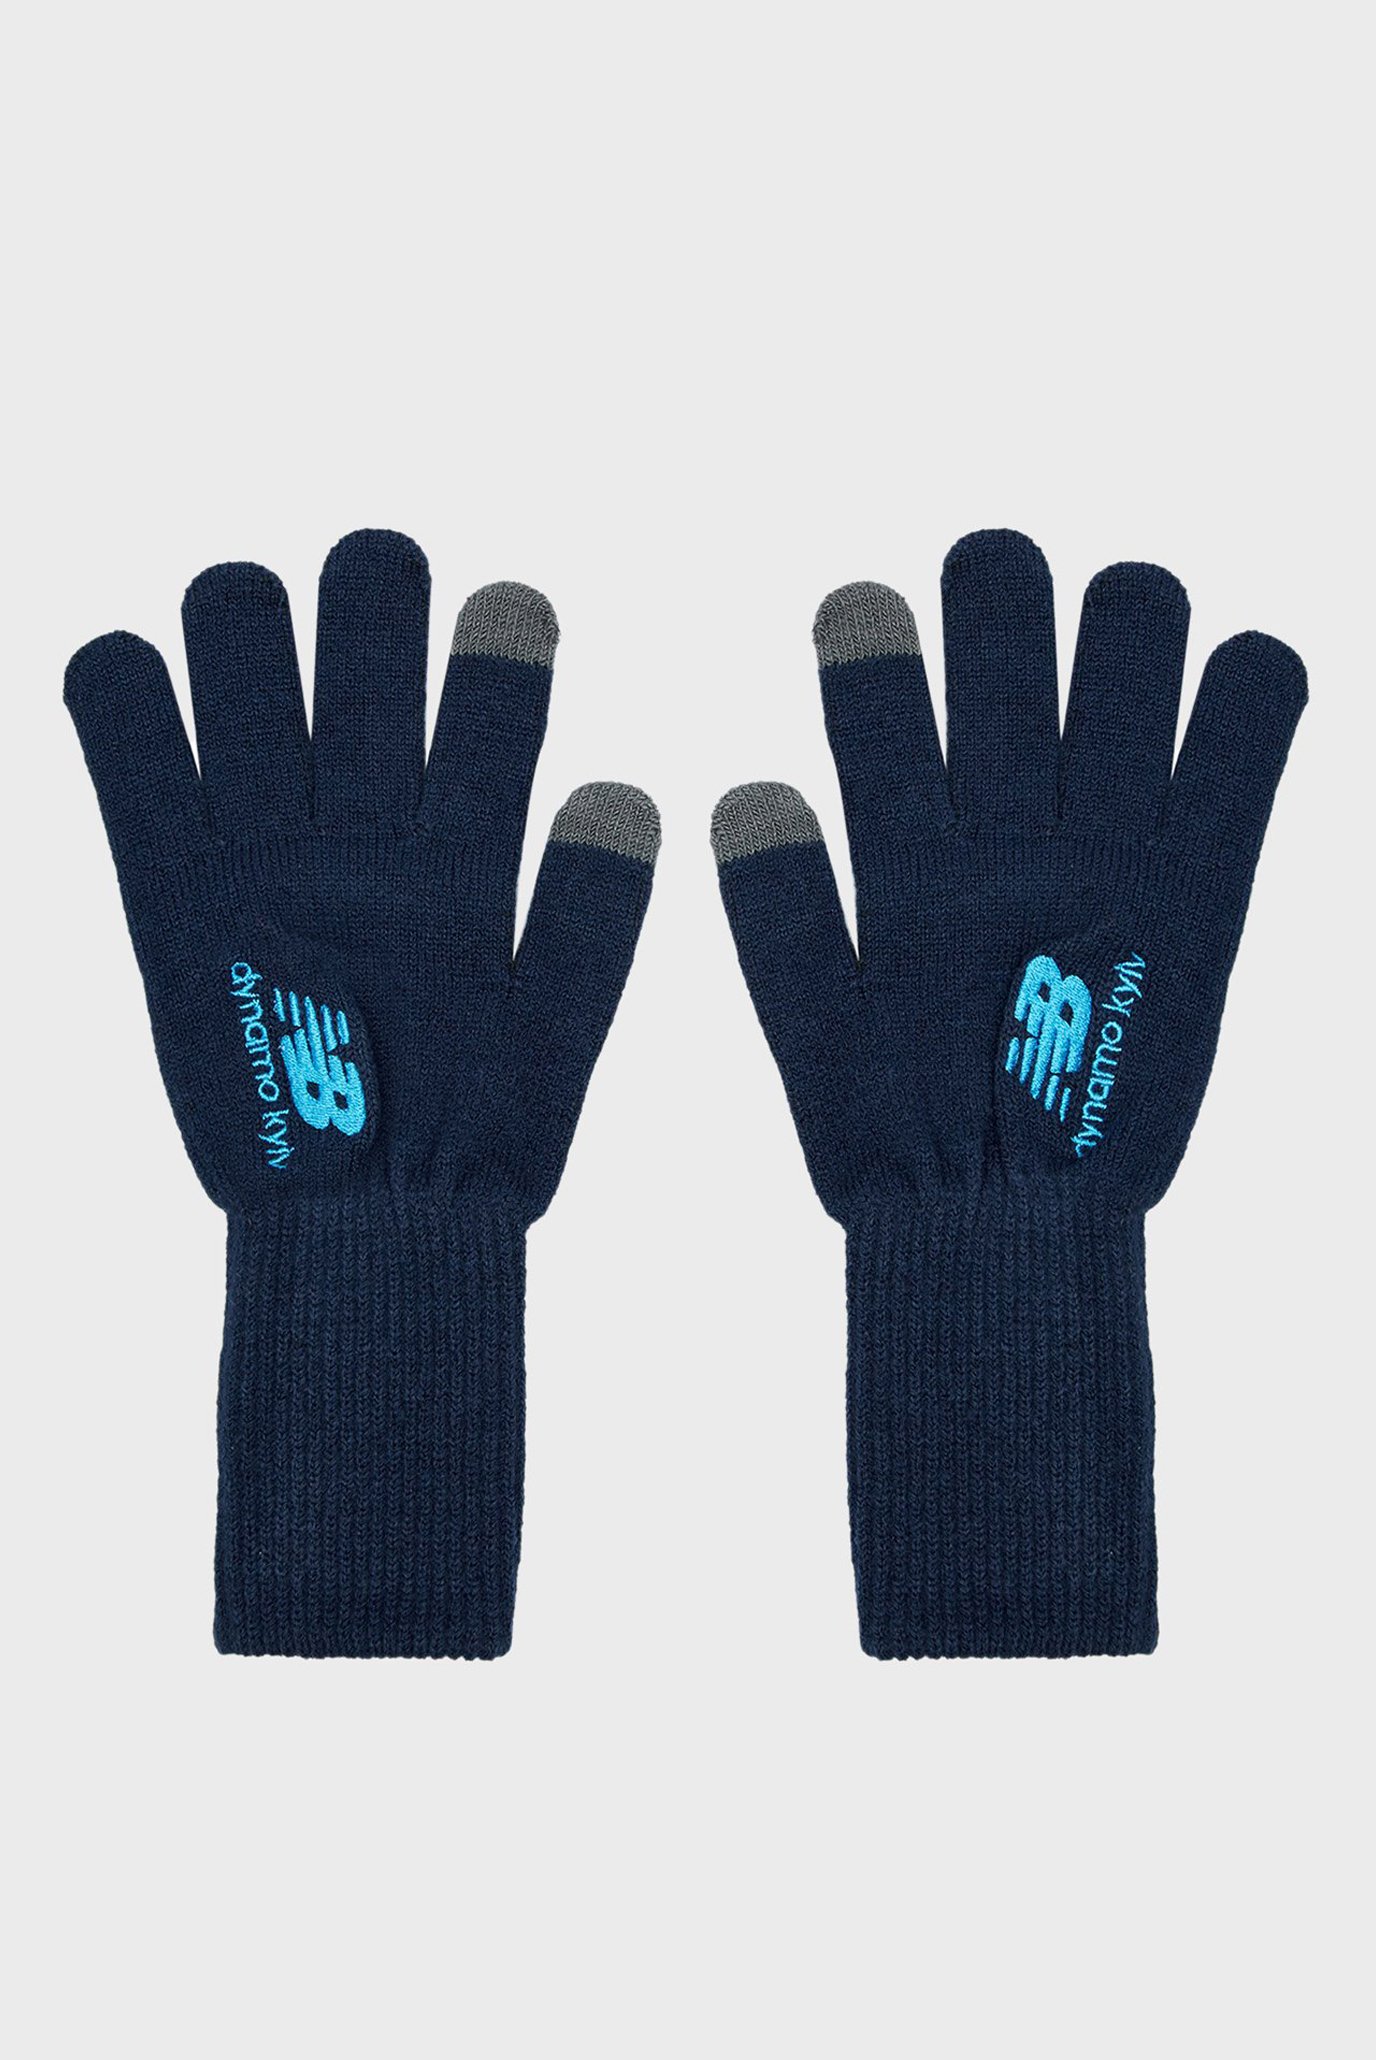 Темно-синие перчатки ФК «Динамо» Киев Elite 1